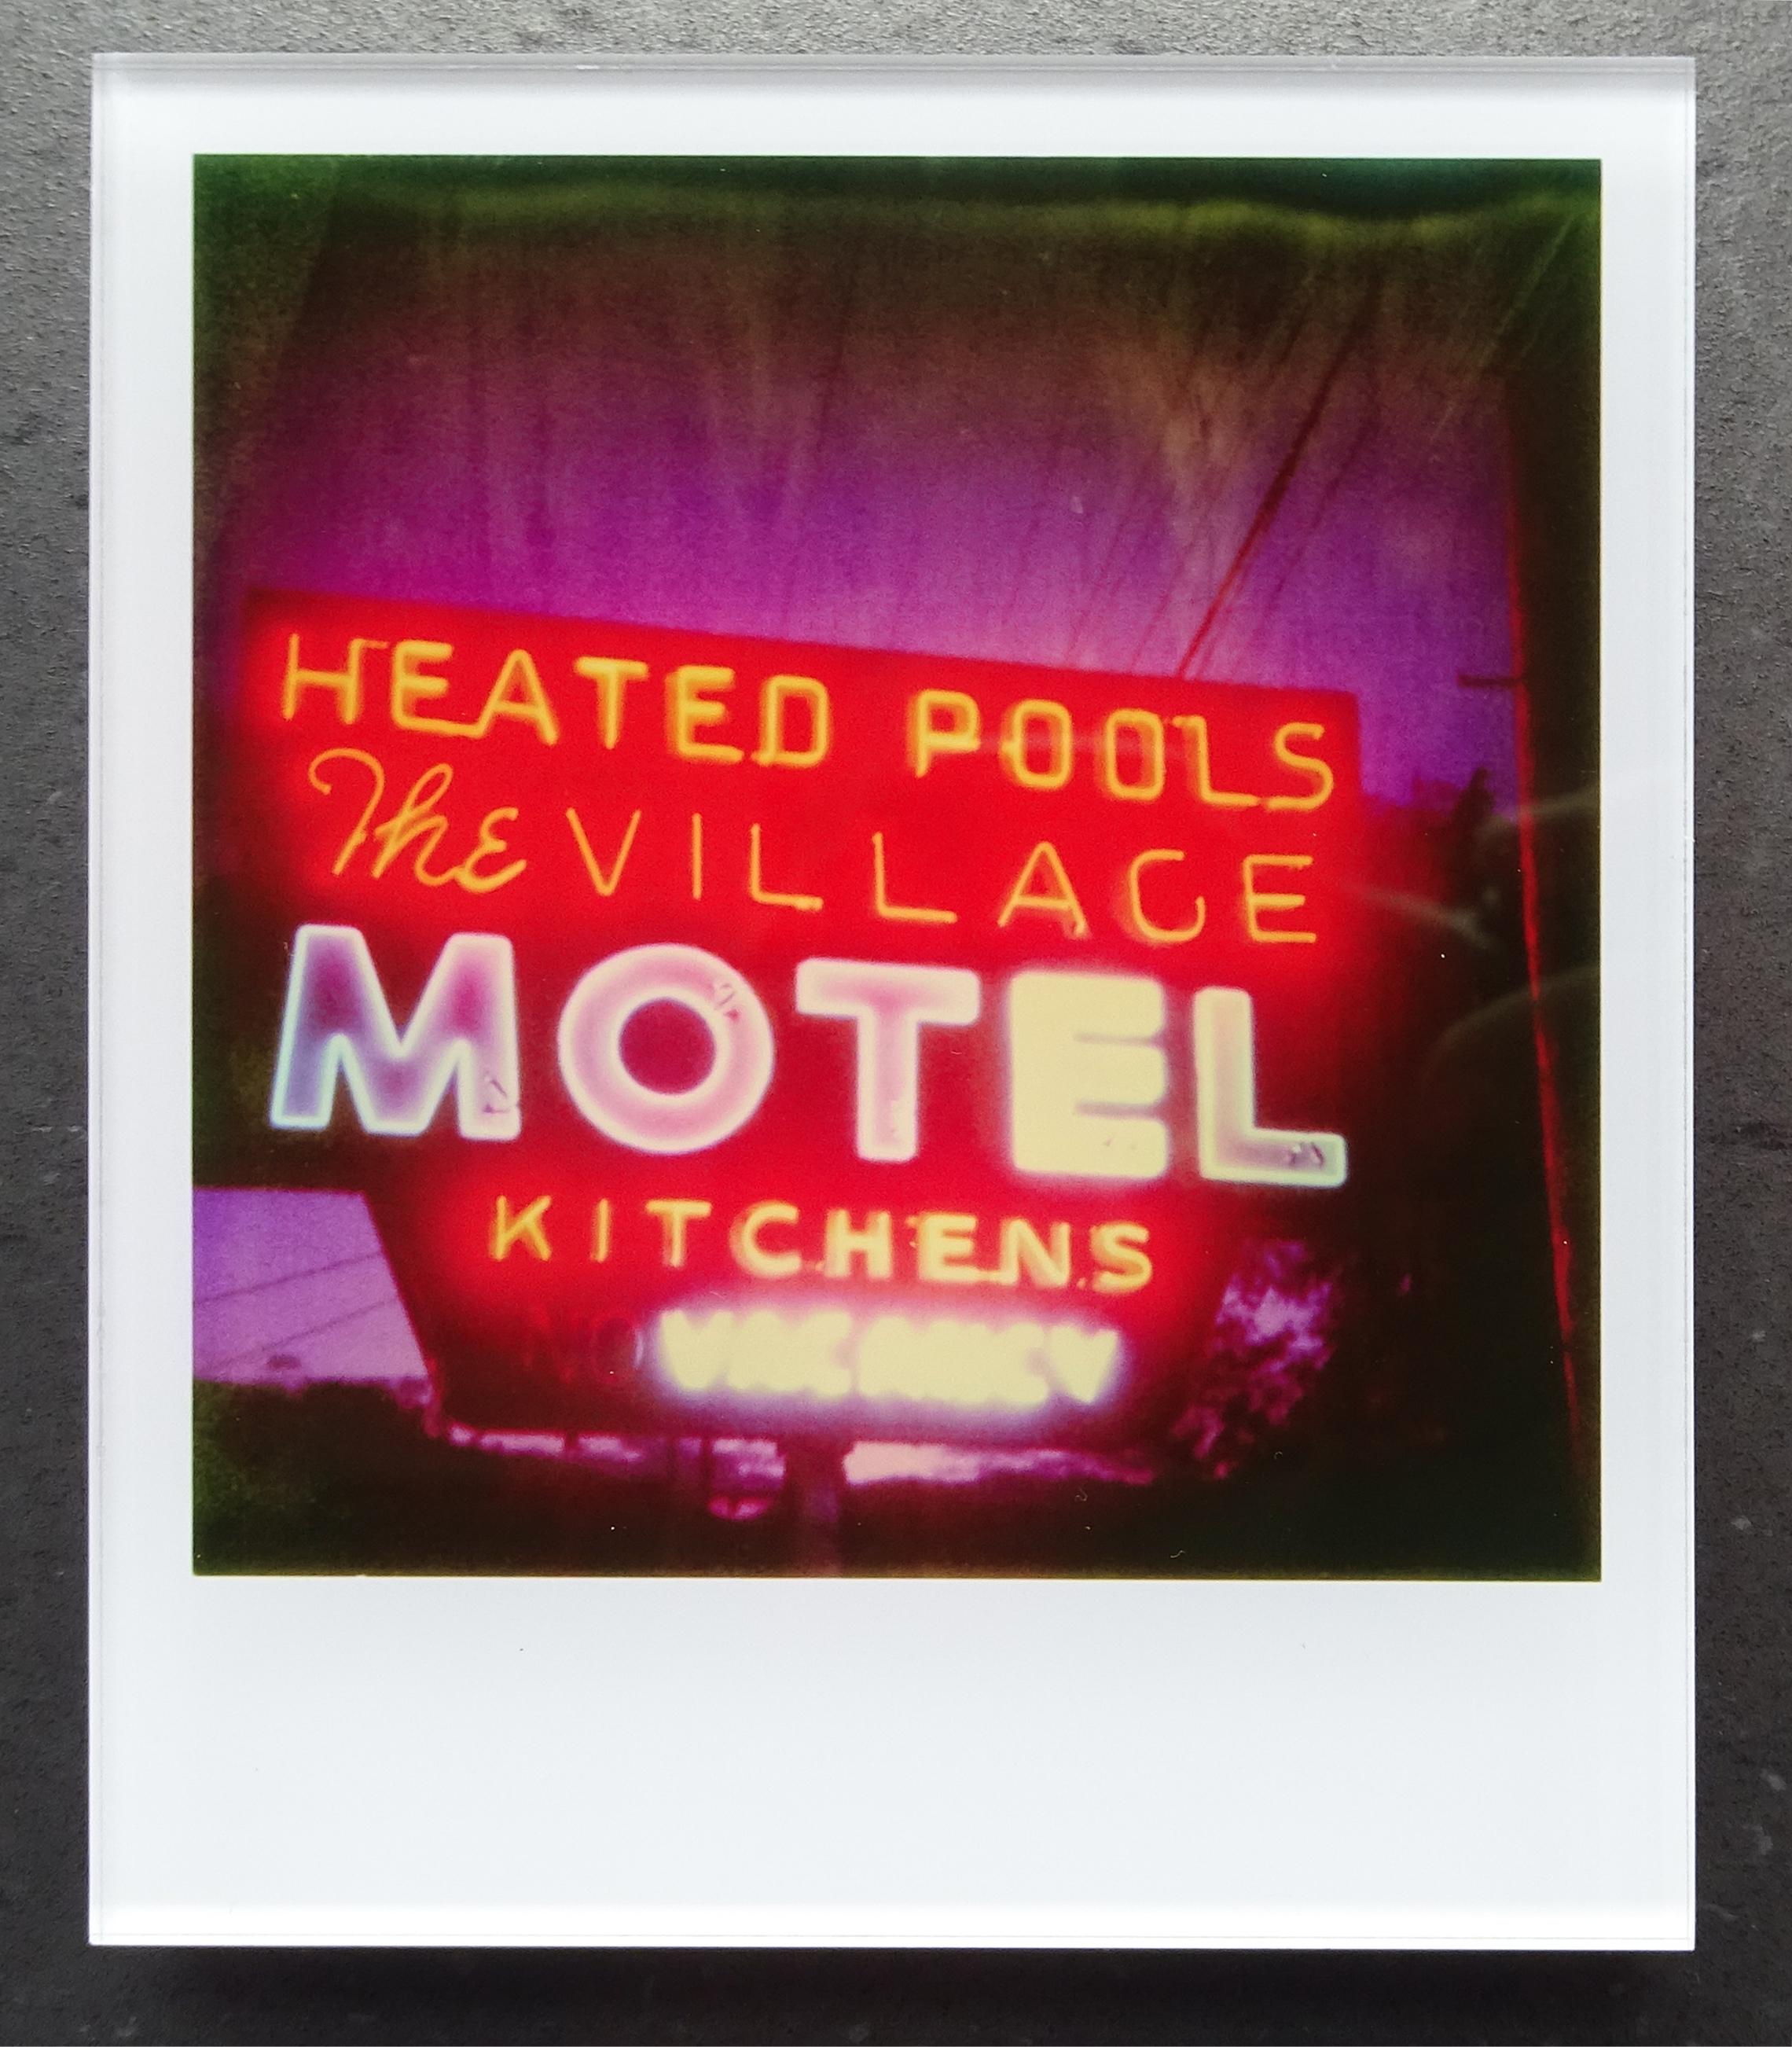 Stefanie Schneider Minis - Village Motel Heated Pool - based on the Polaroid